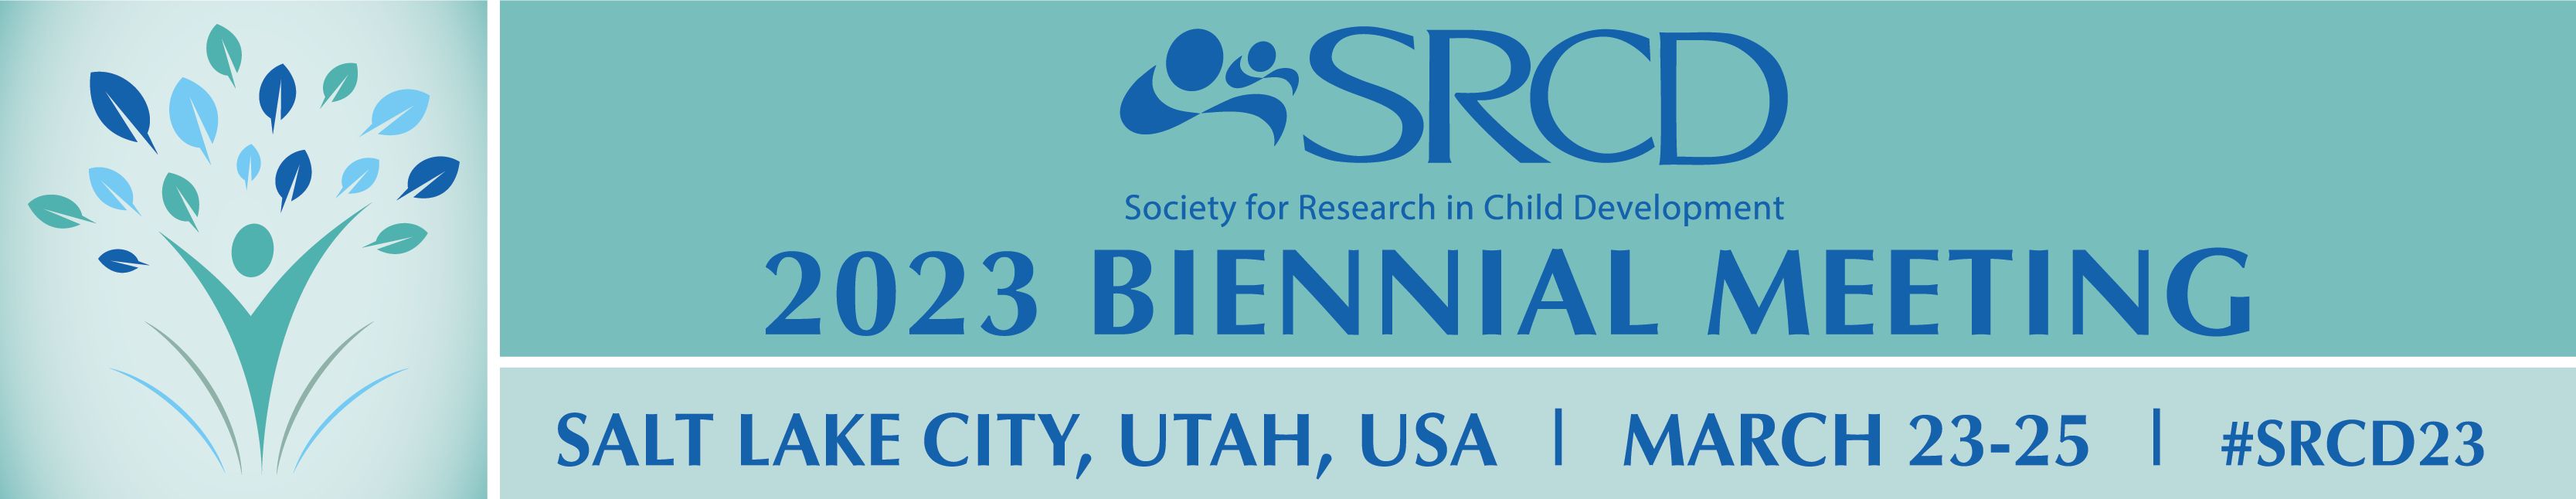 SRCD Society for Research in Child Development, 2023 Biennial meeting, Salt Lake City, Utah, USA | March 23-25 | #SRCD23